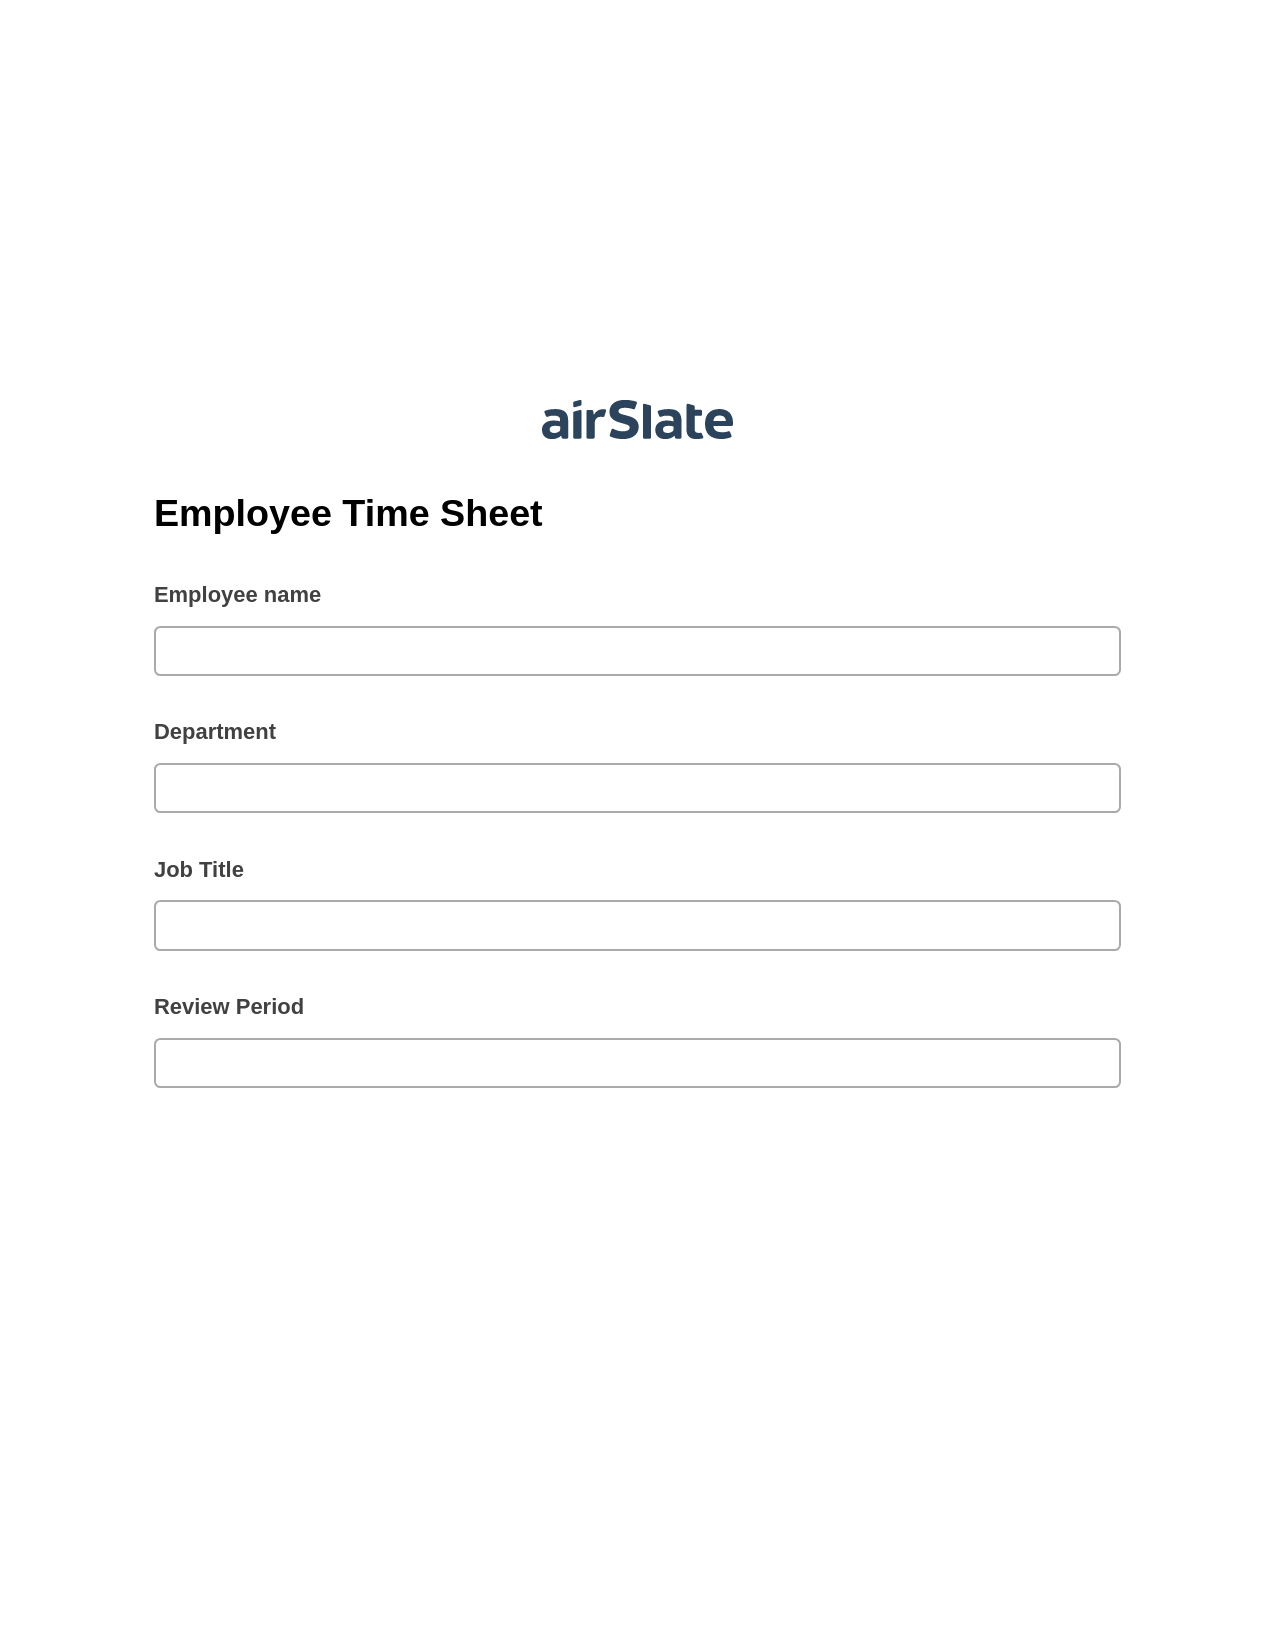 Employee Time Sheet Prefill from NetSuite records, Slack Notification Bot, Slack Notification Postfinish Bot